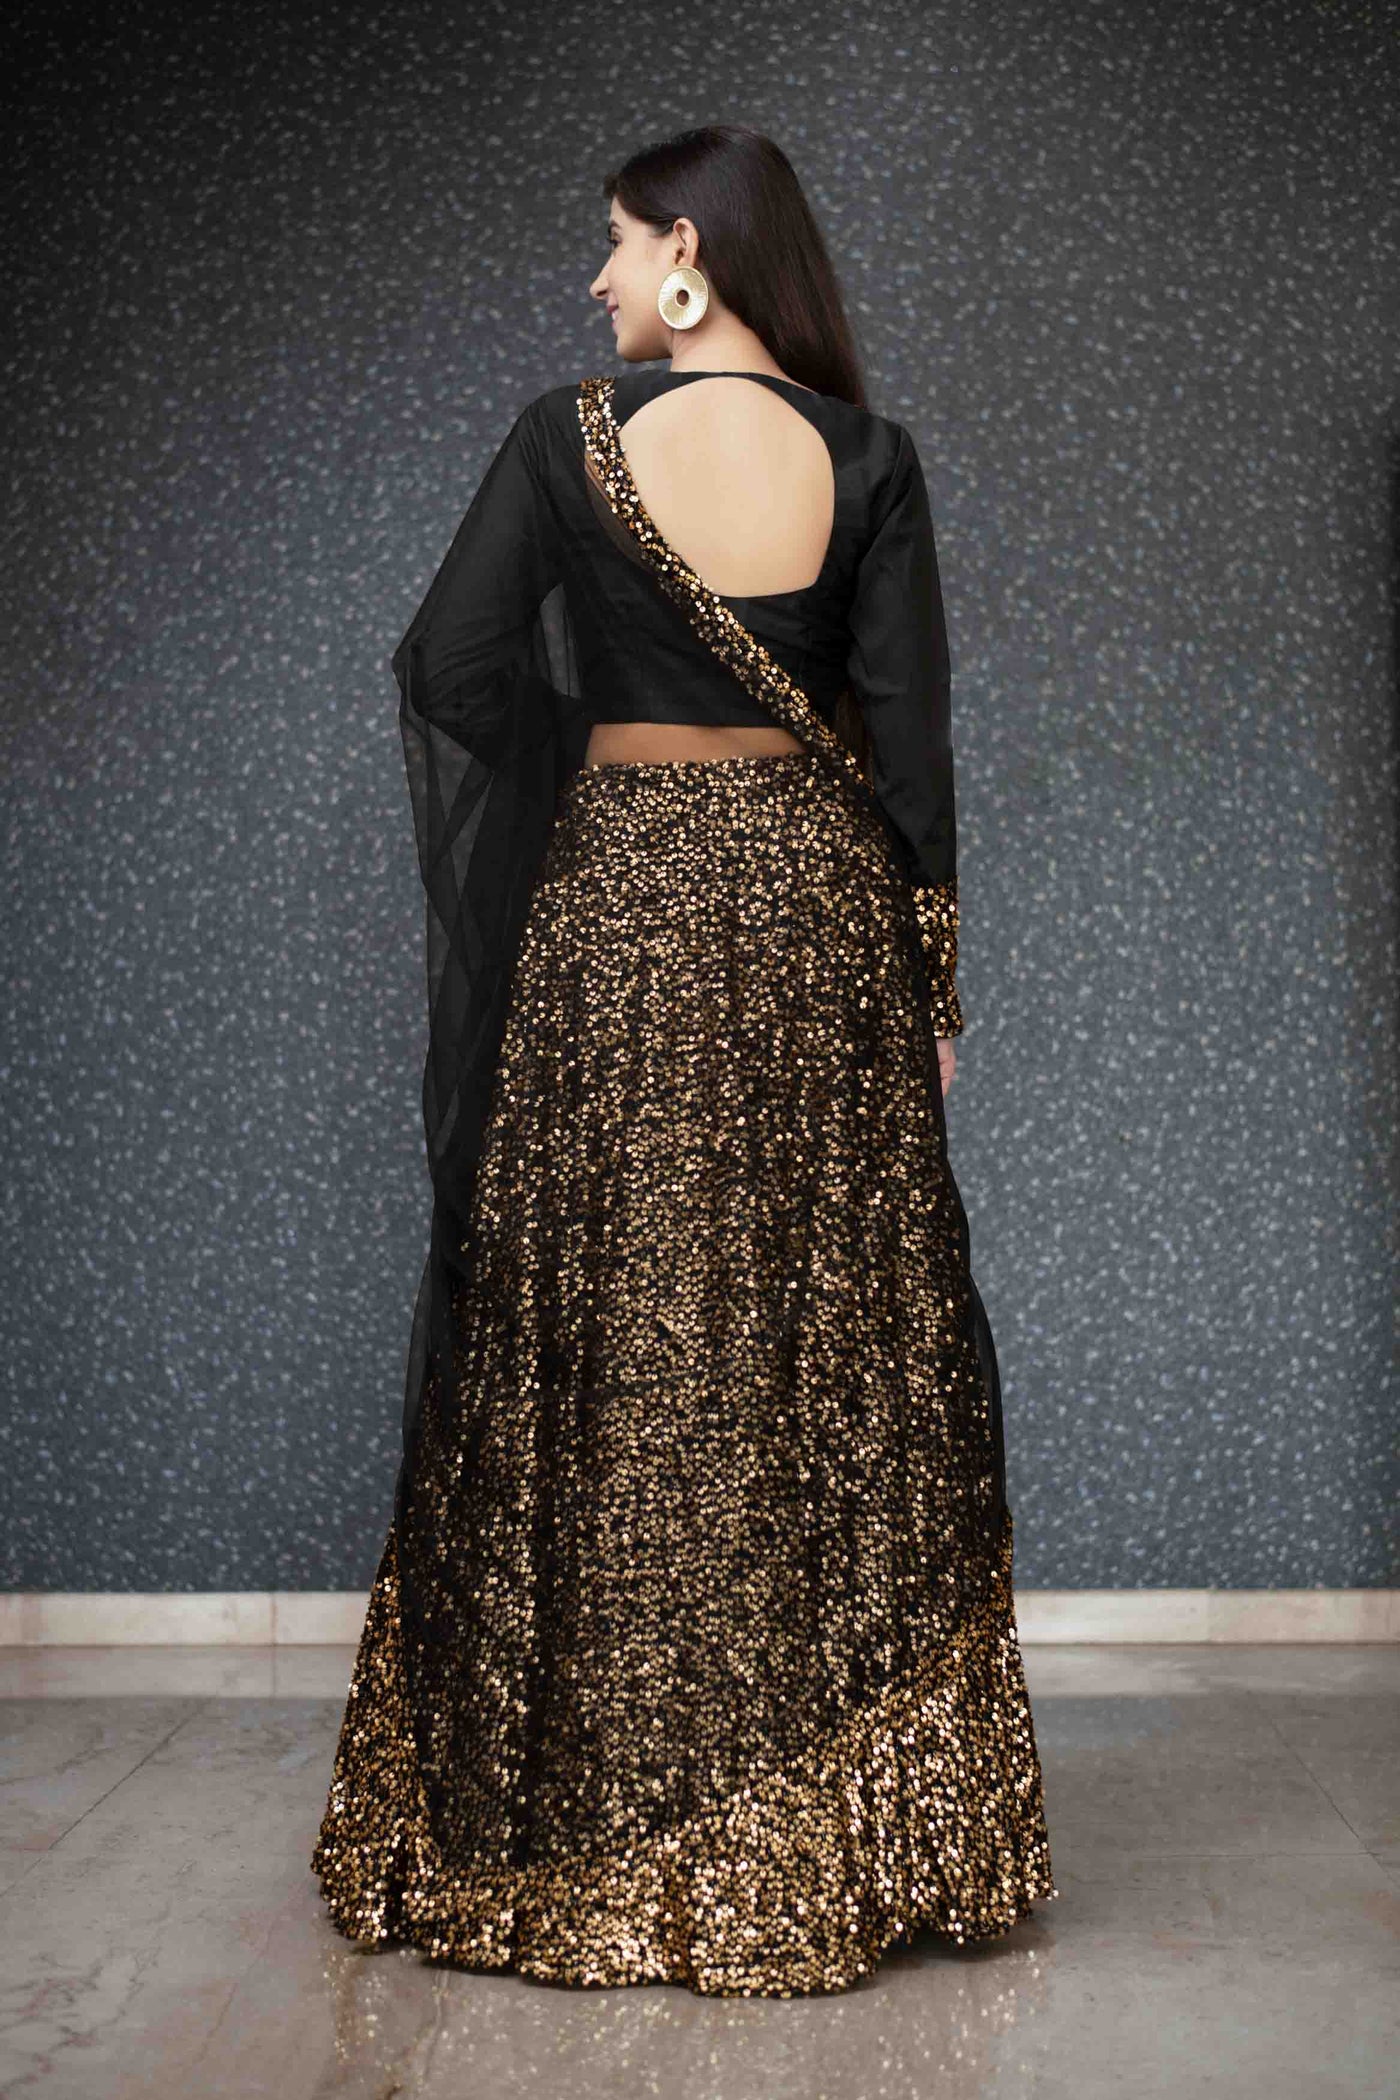 Sara Ali Khan is enigmatic and elusive in black and gold embellished lehenga  from Manish Malhotra's mystique Nooraniyat collection : Bollywood News -  Bollywood Hungama